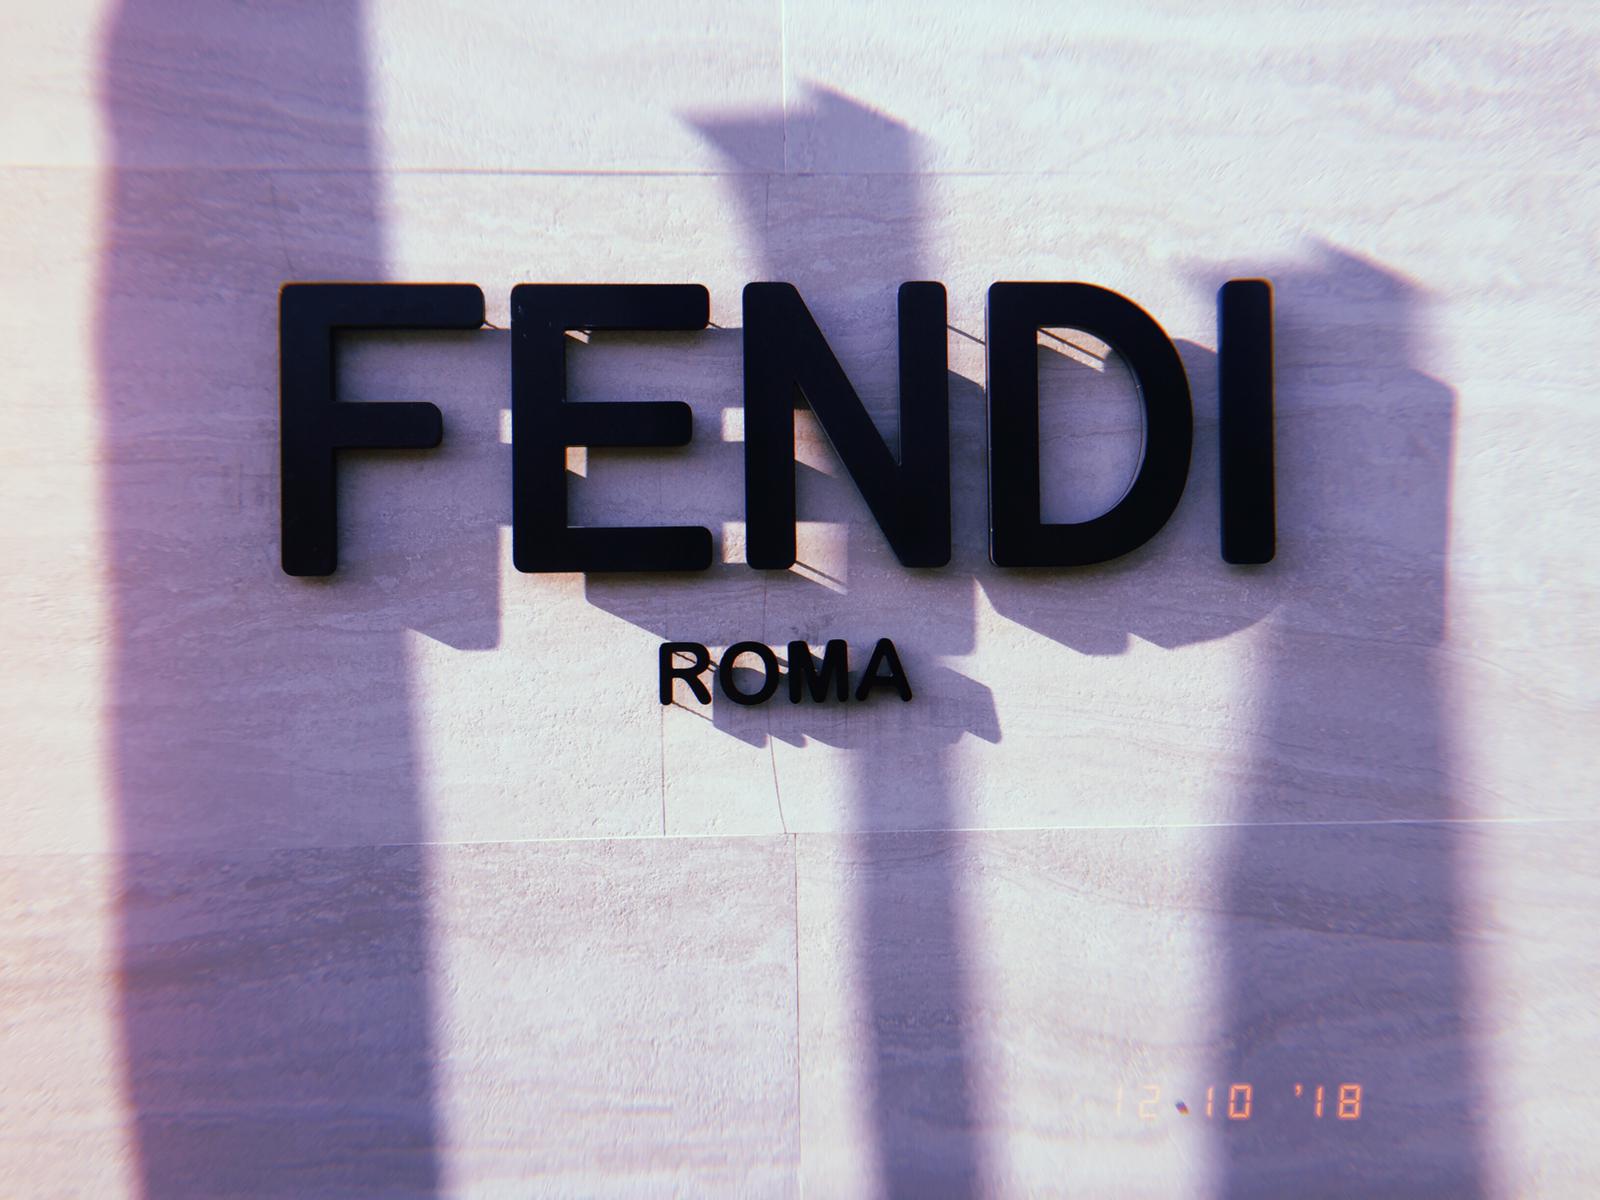 Fendi_Logo